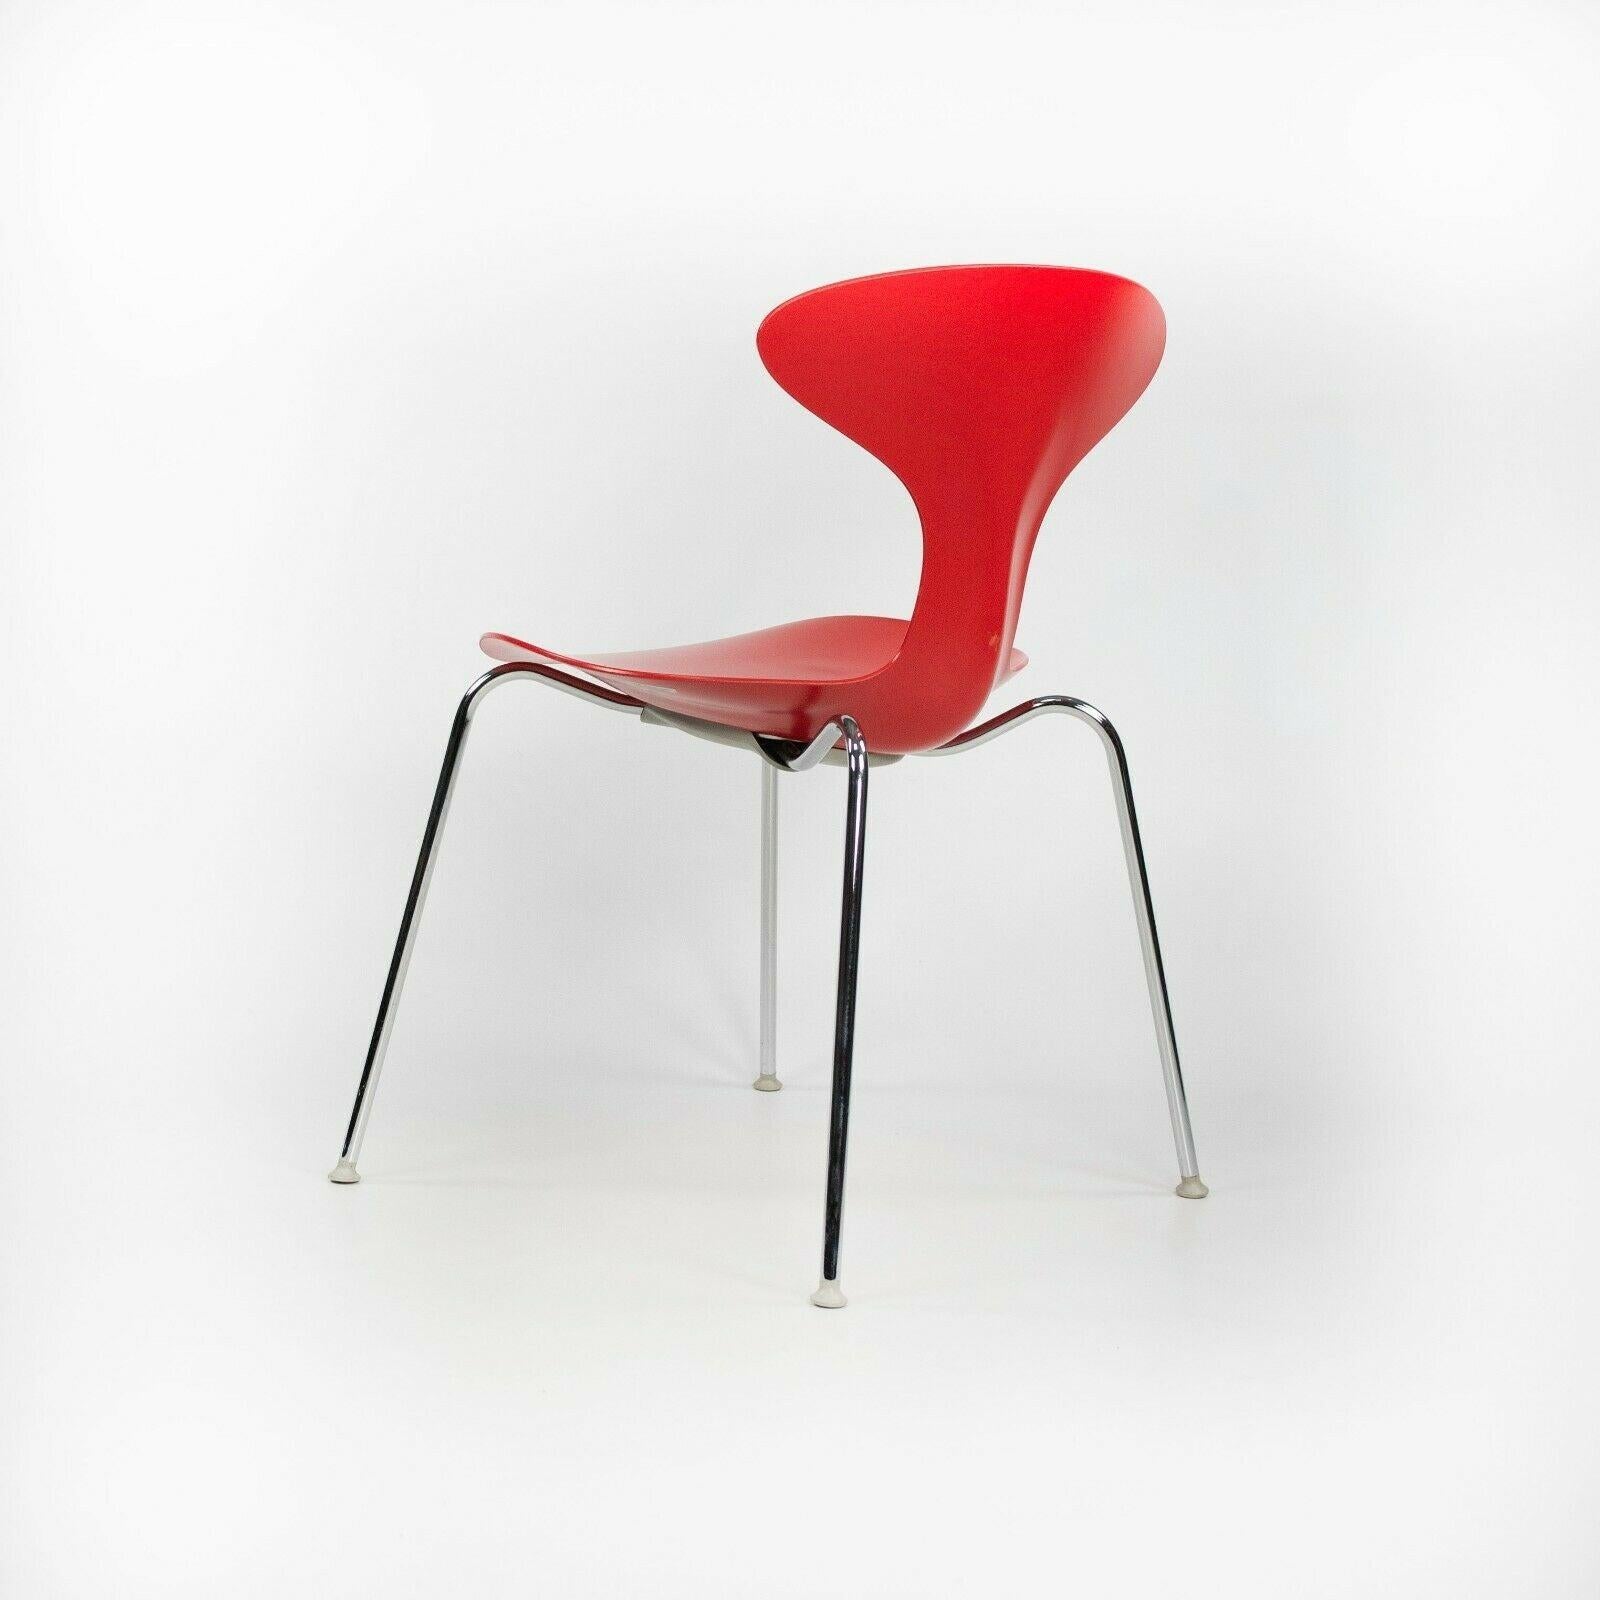 2010s Ross Lovegrove Orbit Chair by Bernhardt Design in Red Plastic Chrome Legs For Sale 4